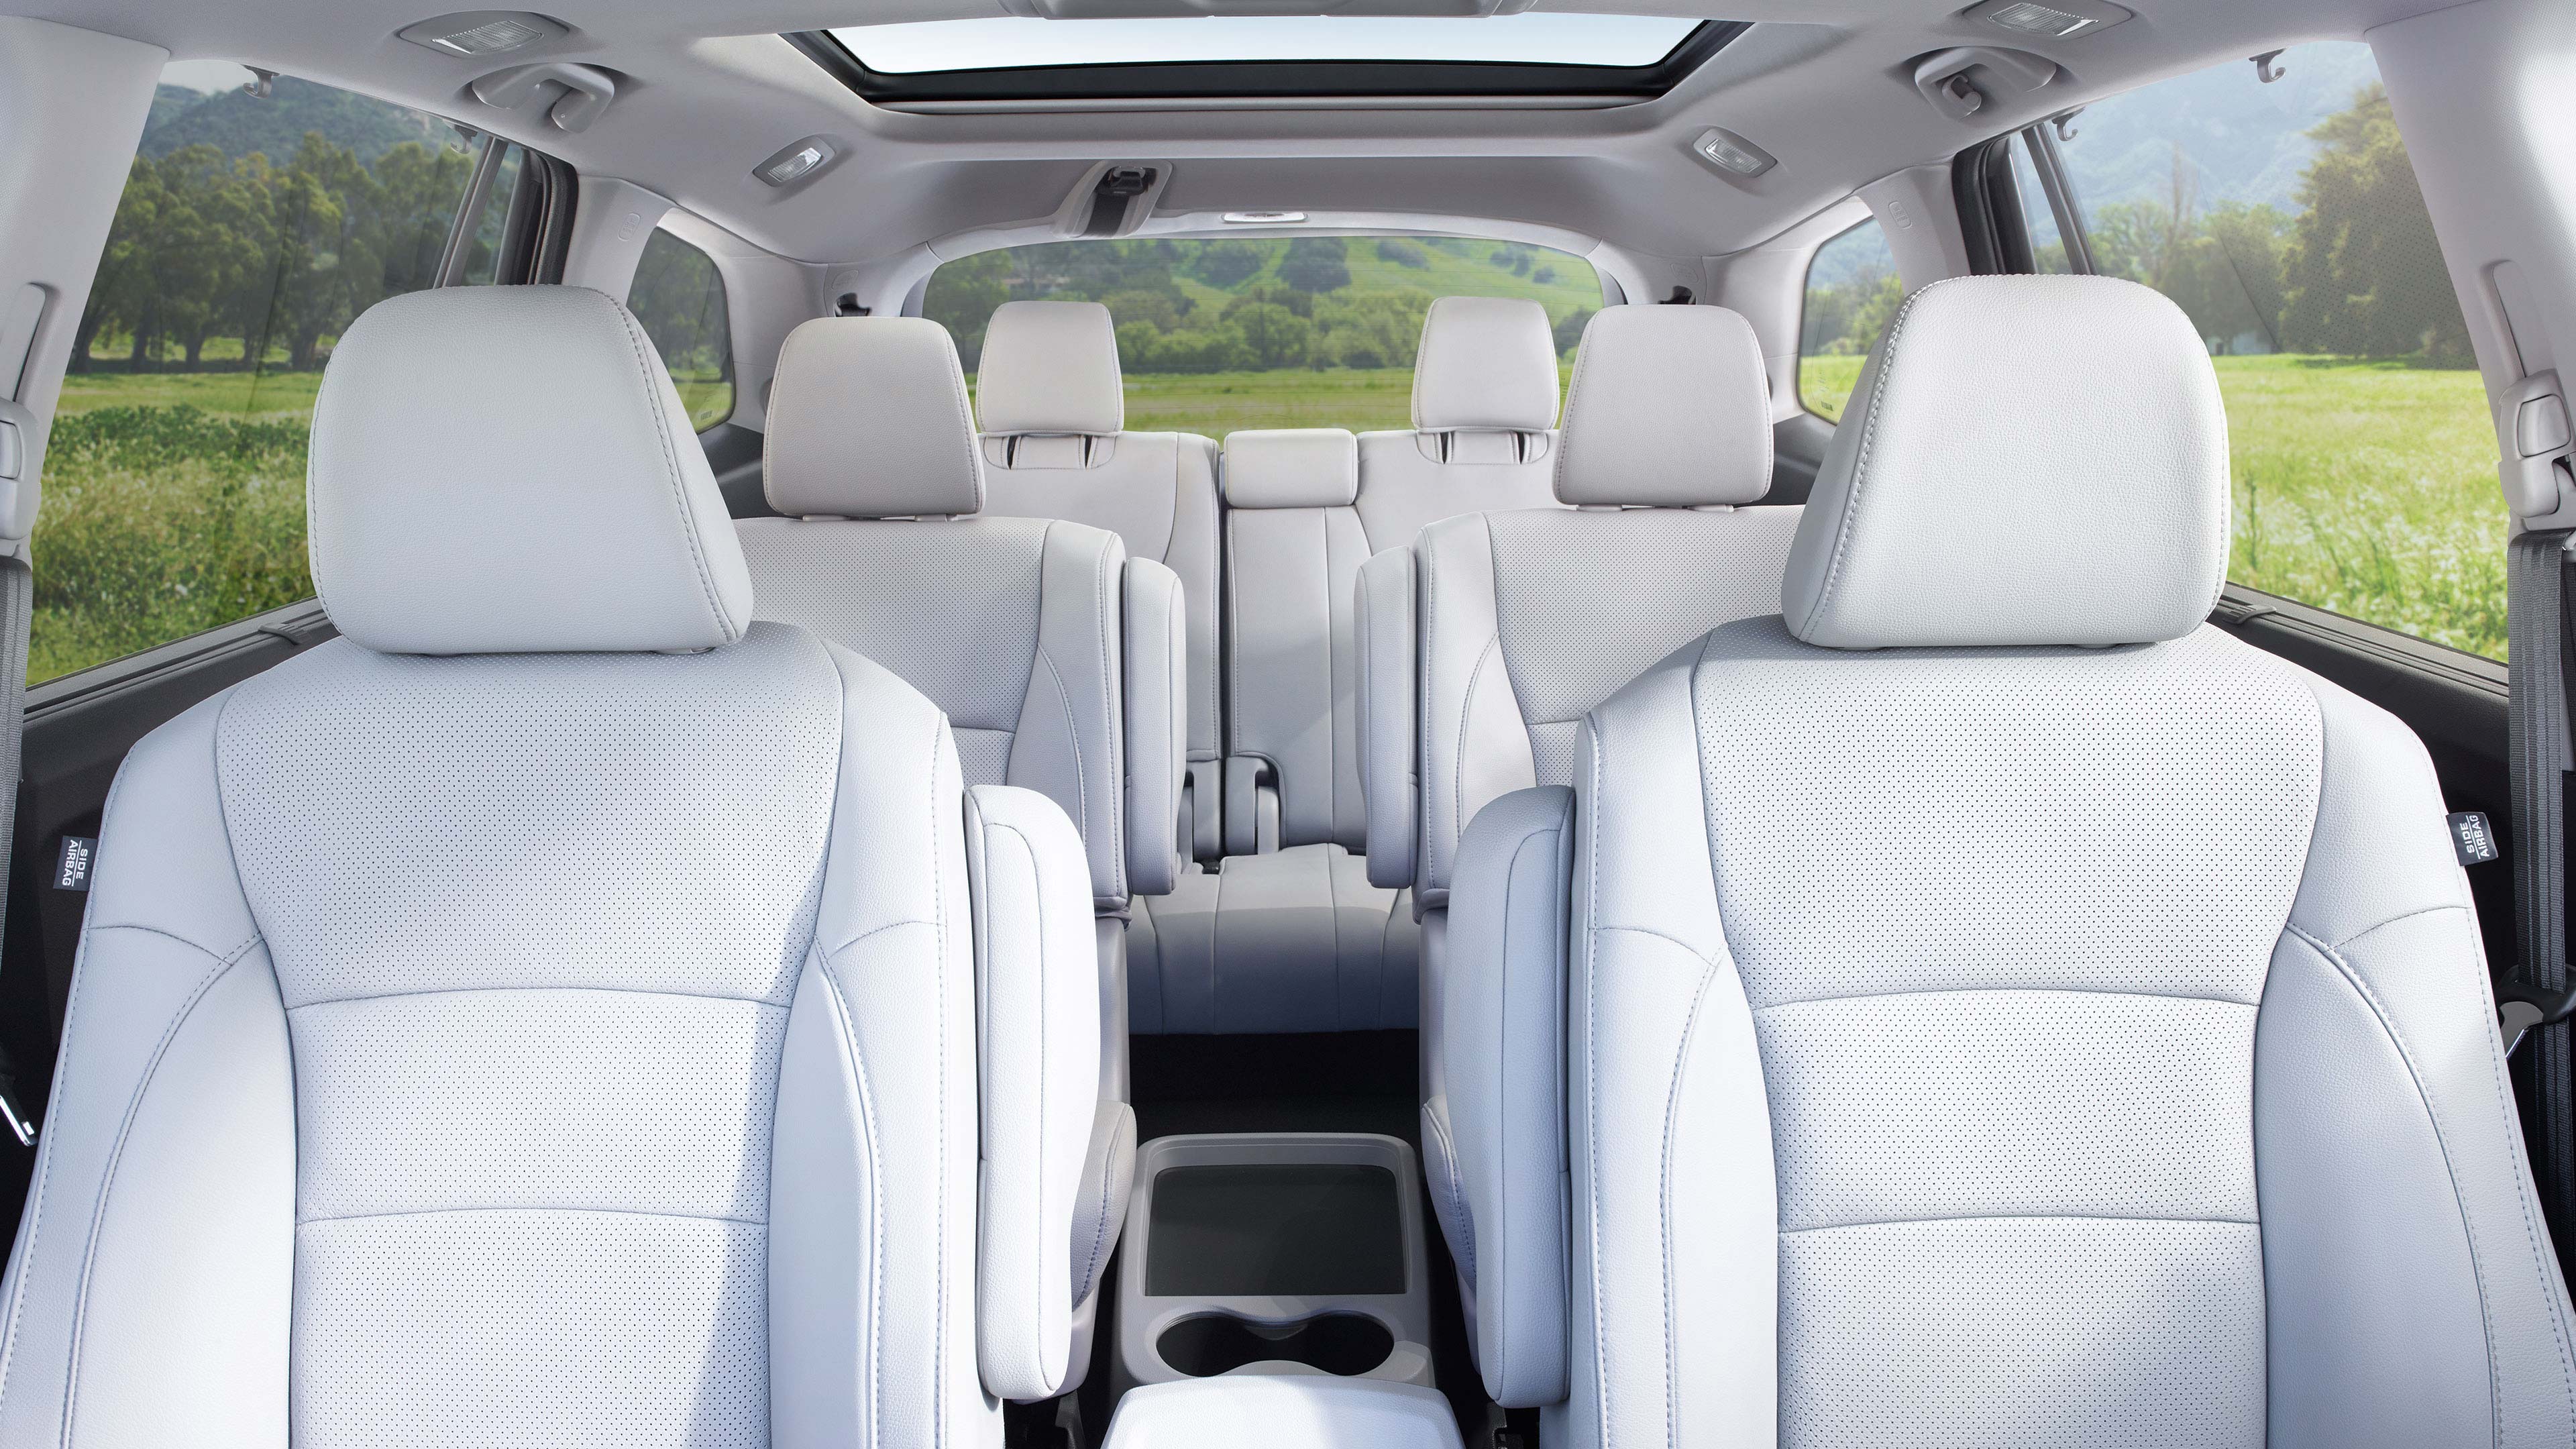 Honda Pilot Lx interior whole seat view 